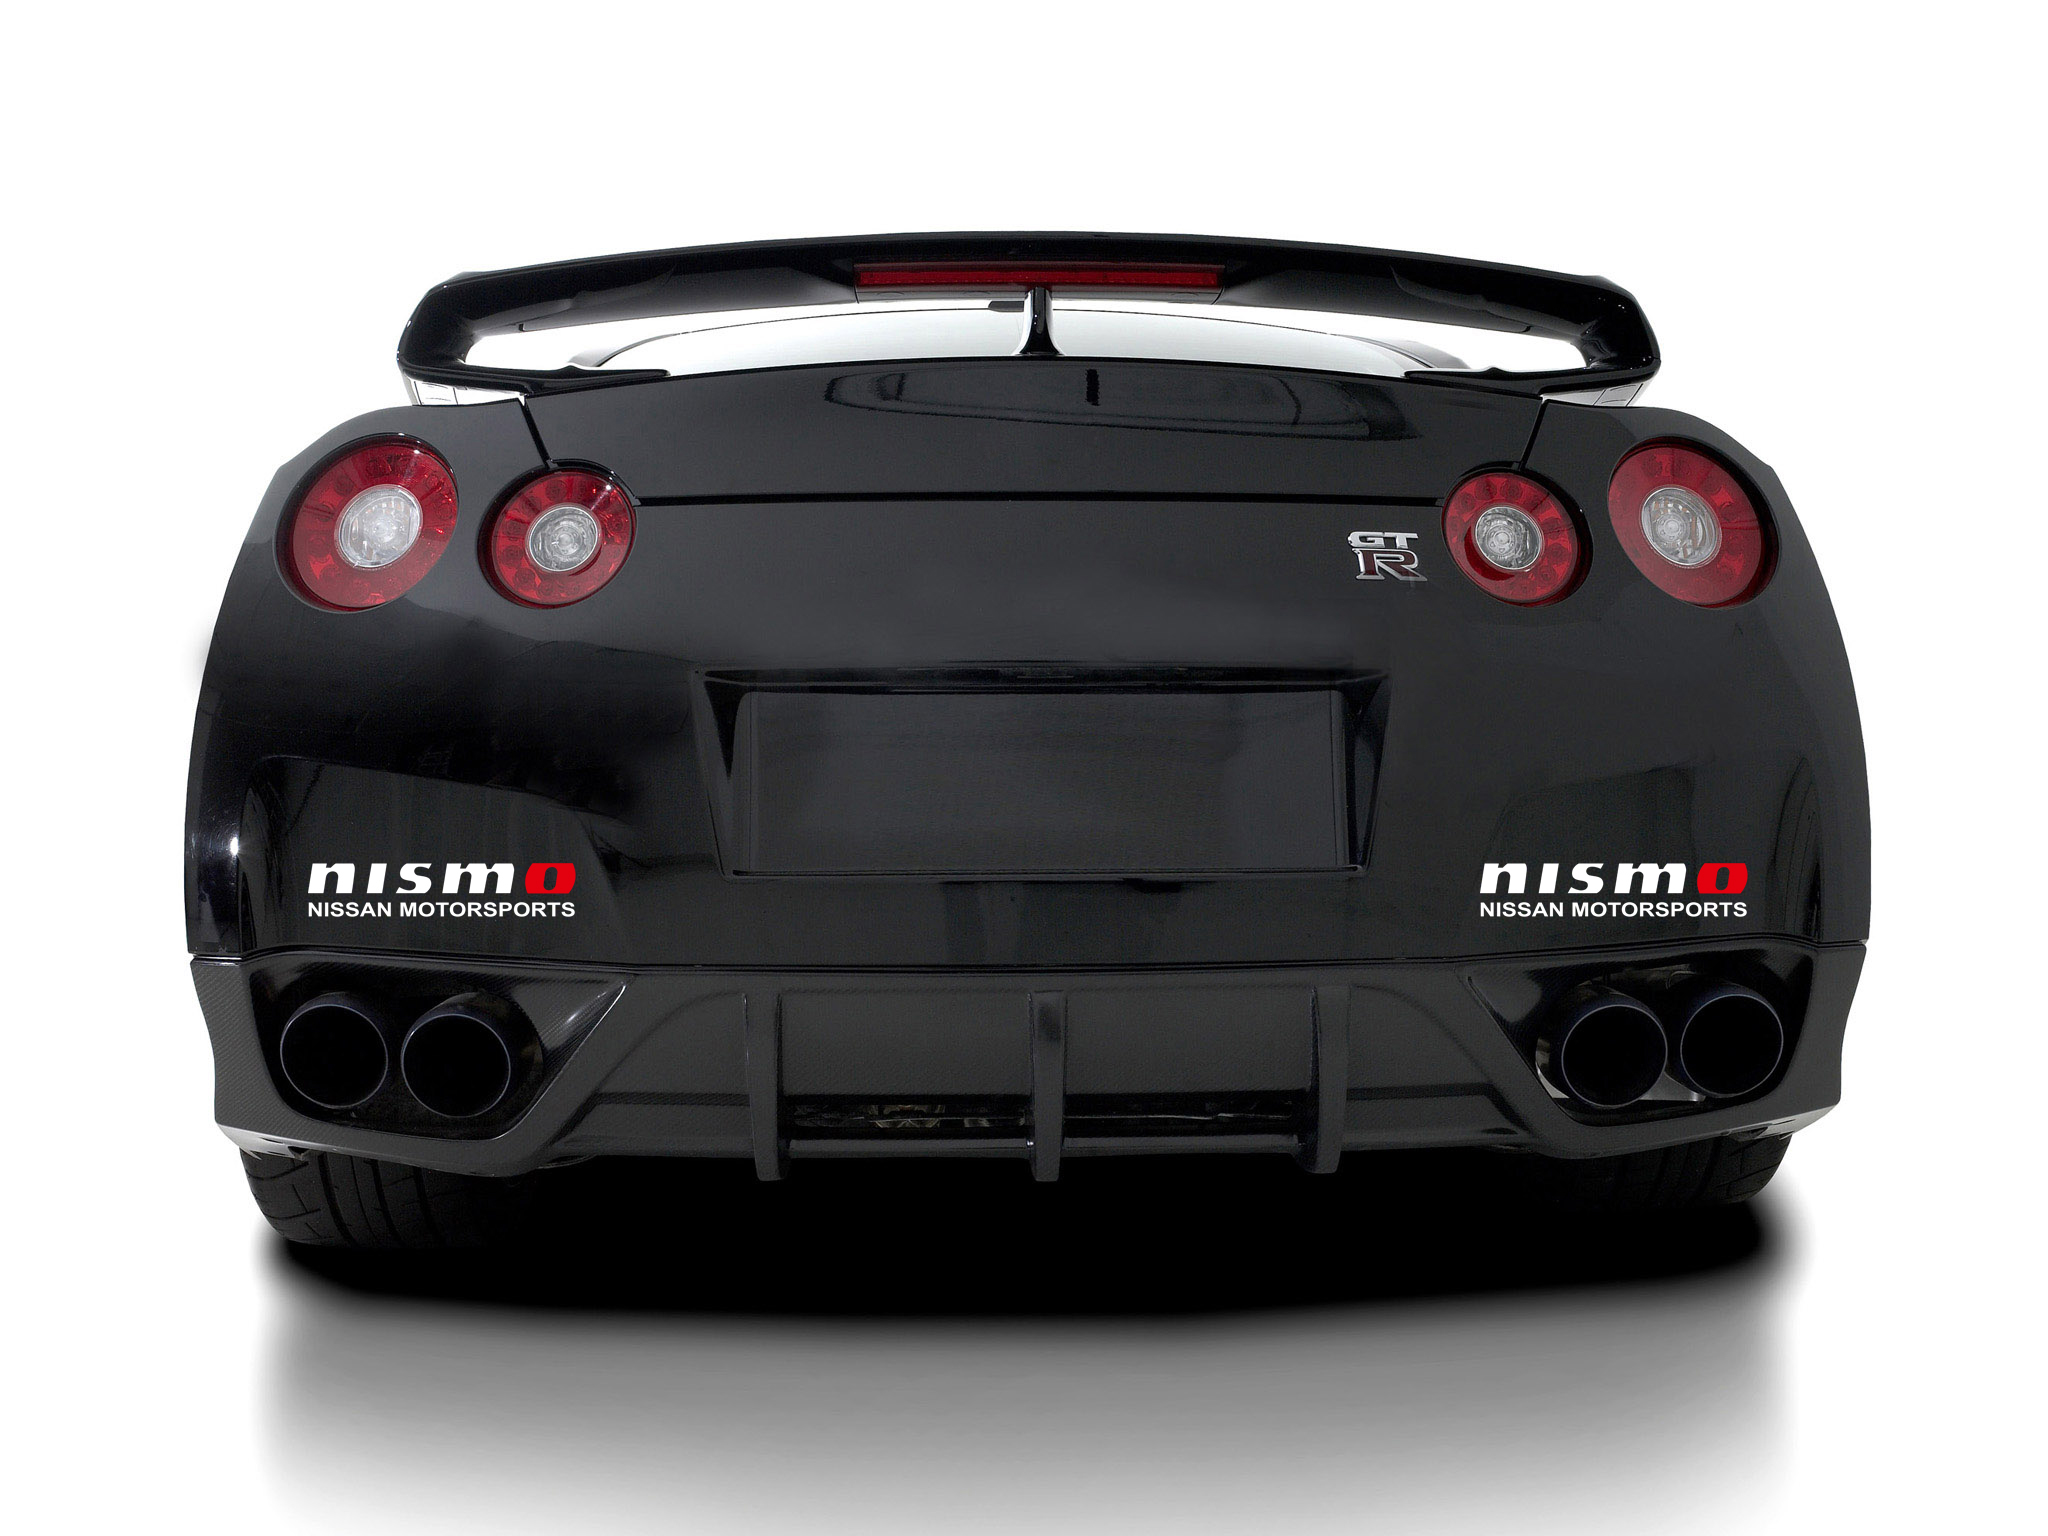 2x NISMO Nissan Motorsports Racing Vinyl Sticker Decal fits to GTR Altima 350Z 370Z